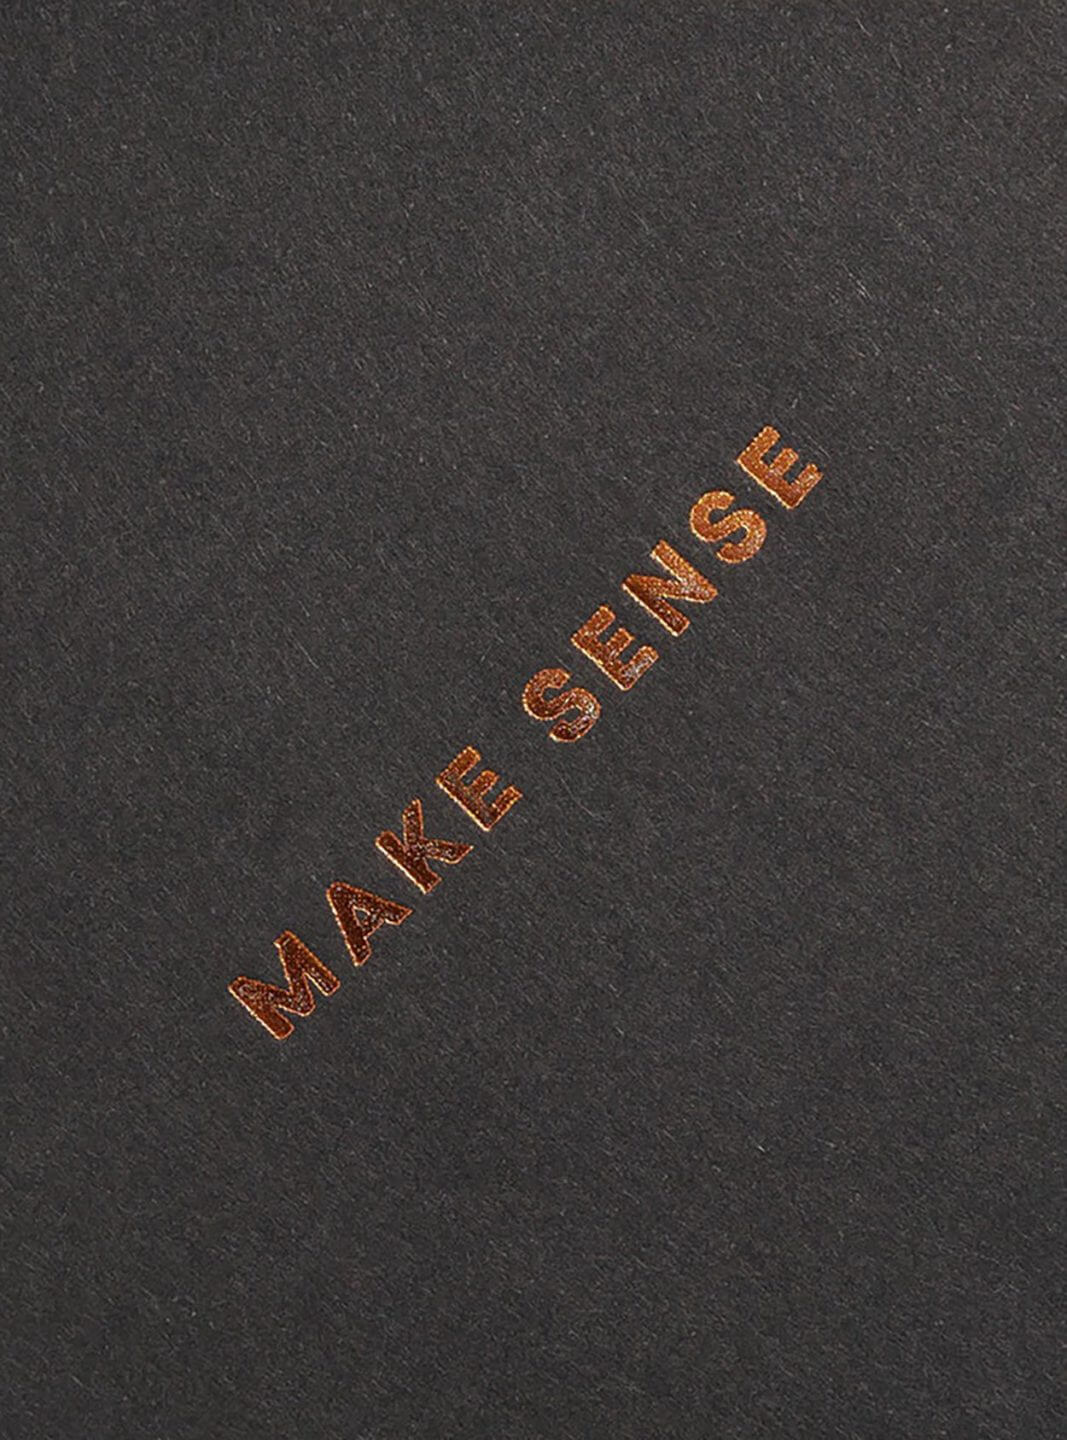 The words "Make Sense" in rose gold foil stamping